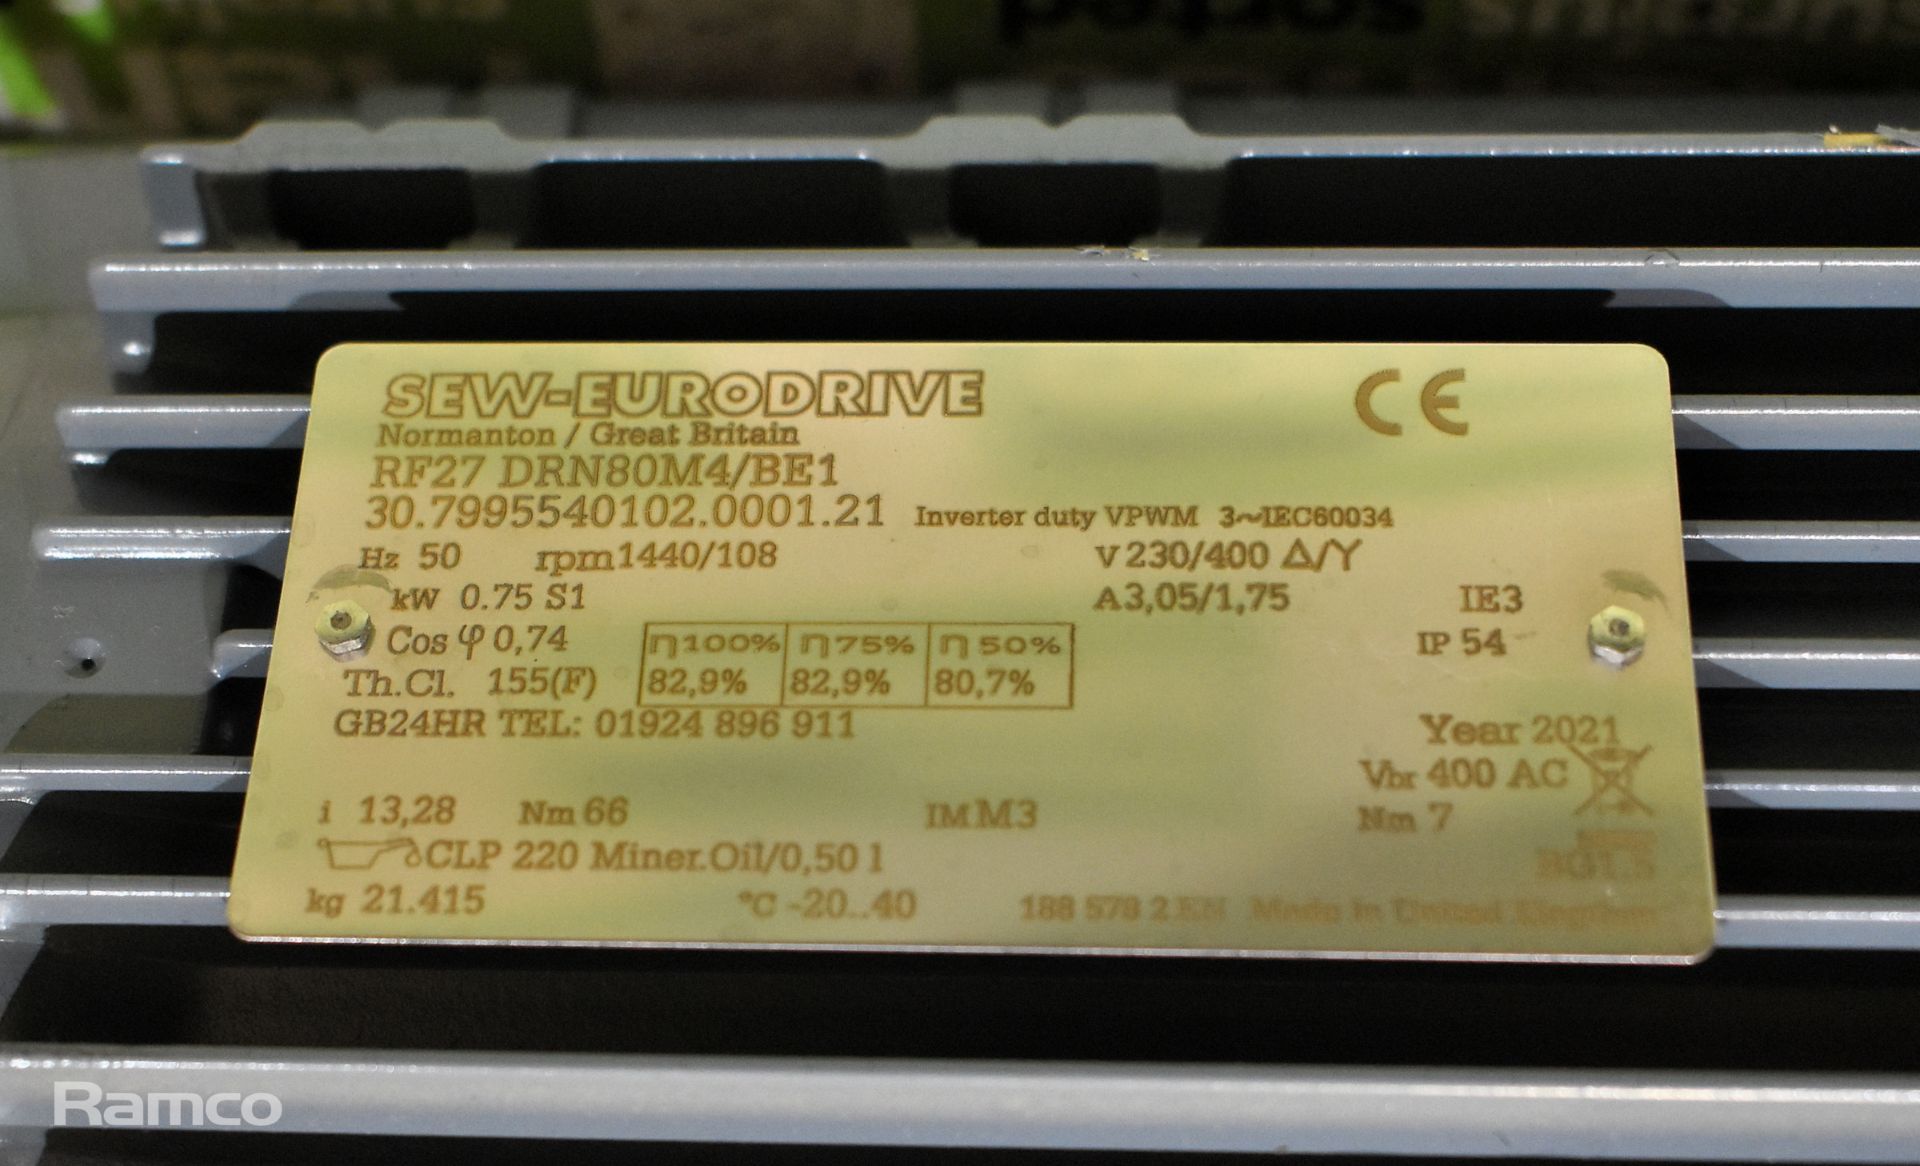 SEW-Eurodrive - RF27 DRN80M4/BE1 - gear electric motor - 1440/108rpm - 0.75kW - 230/400V - 3.5/1.75A - Image 4 of 4